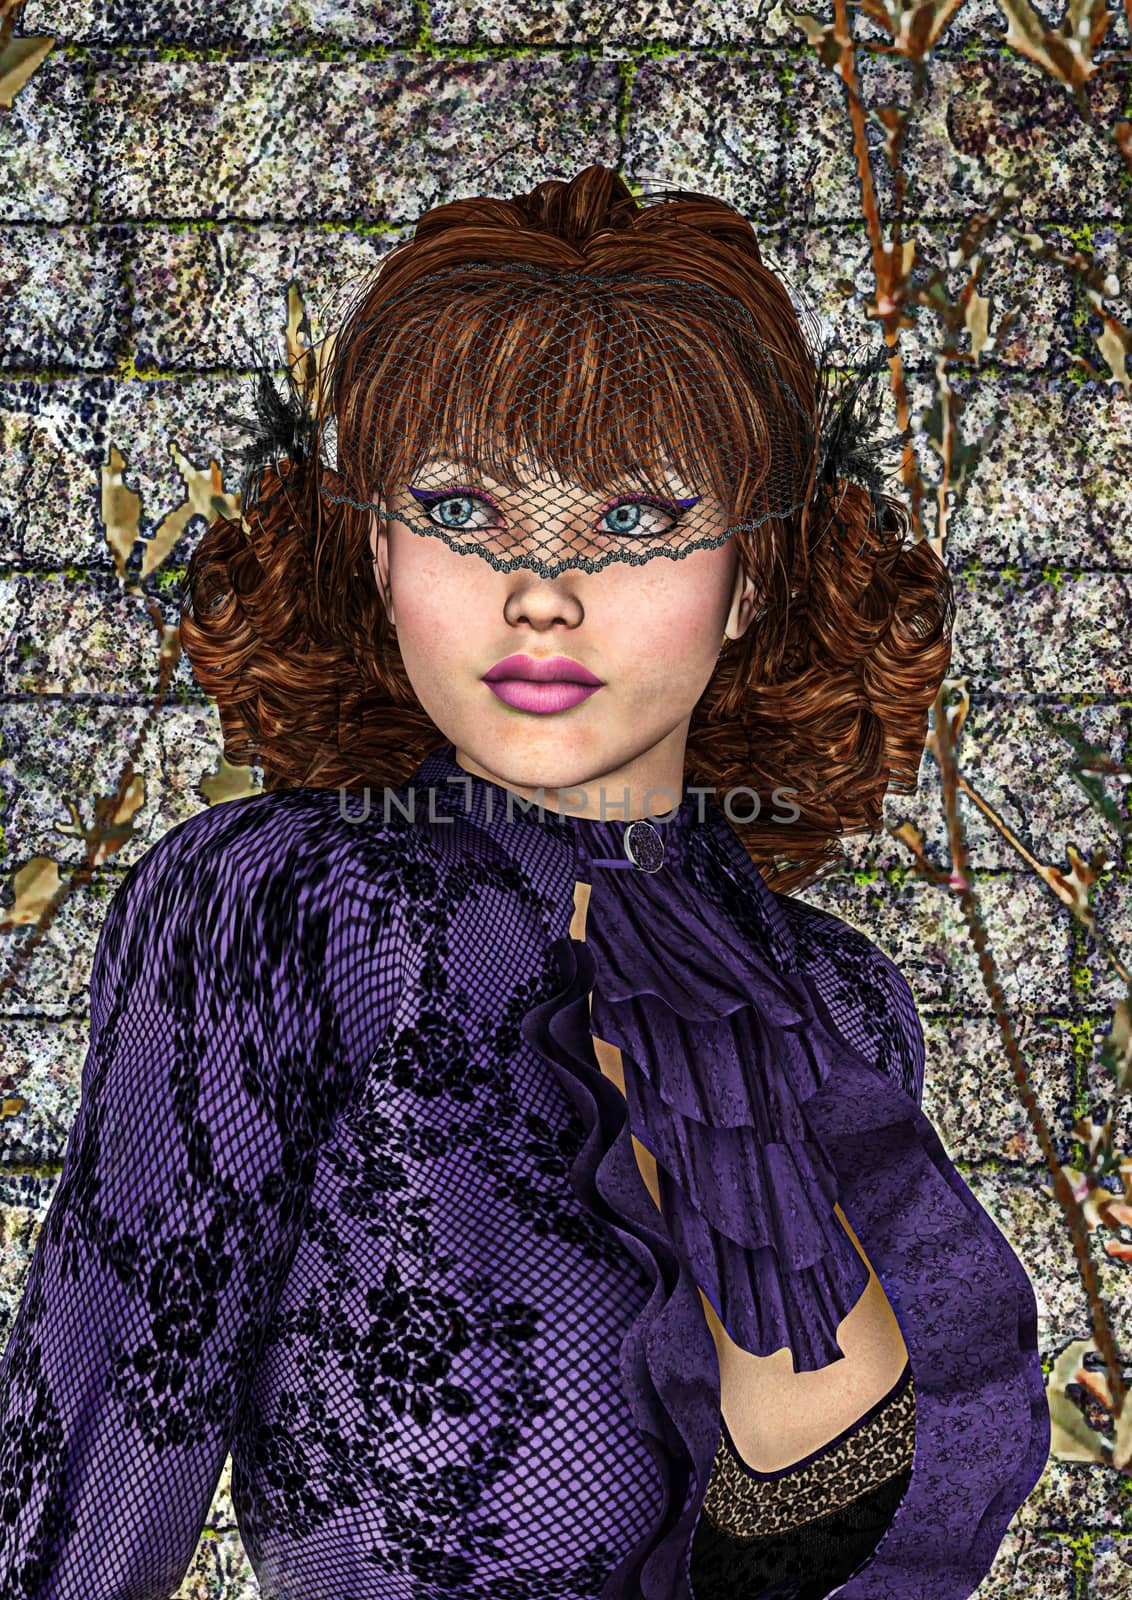 Lady in Purple by Vac